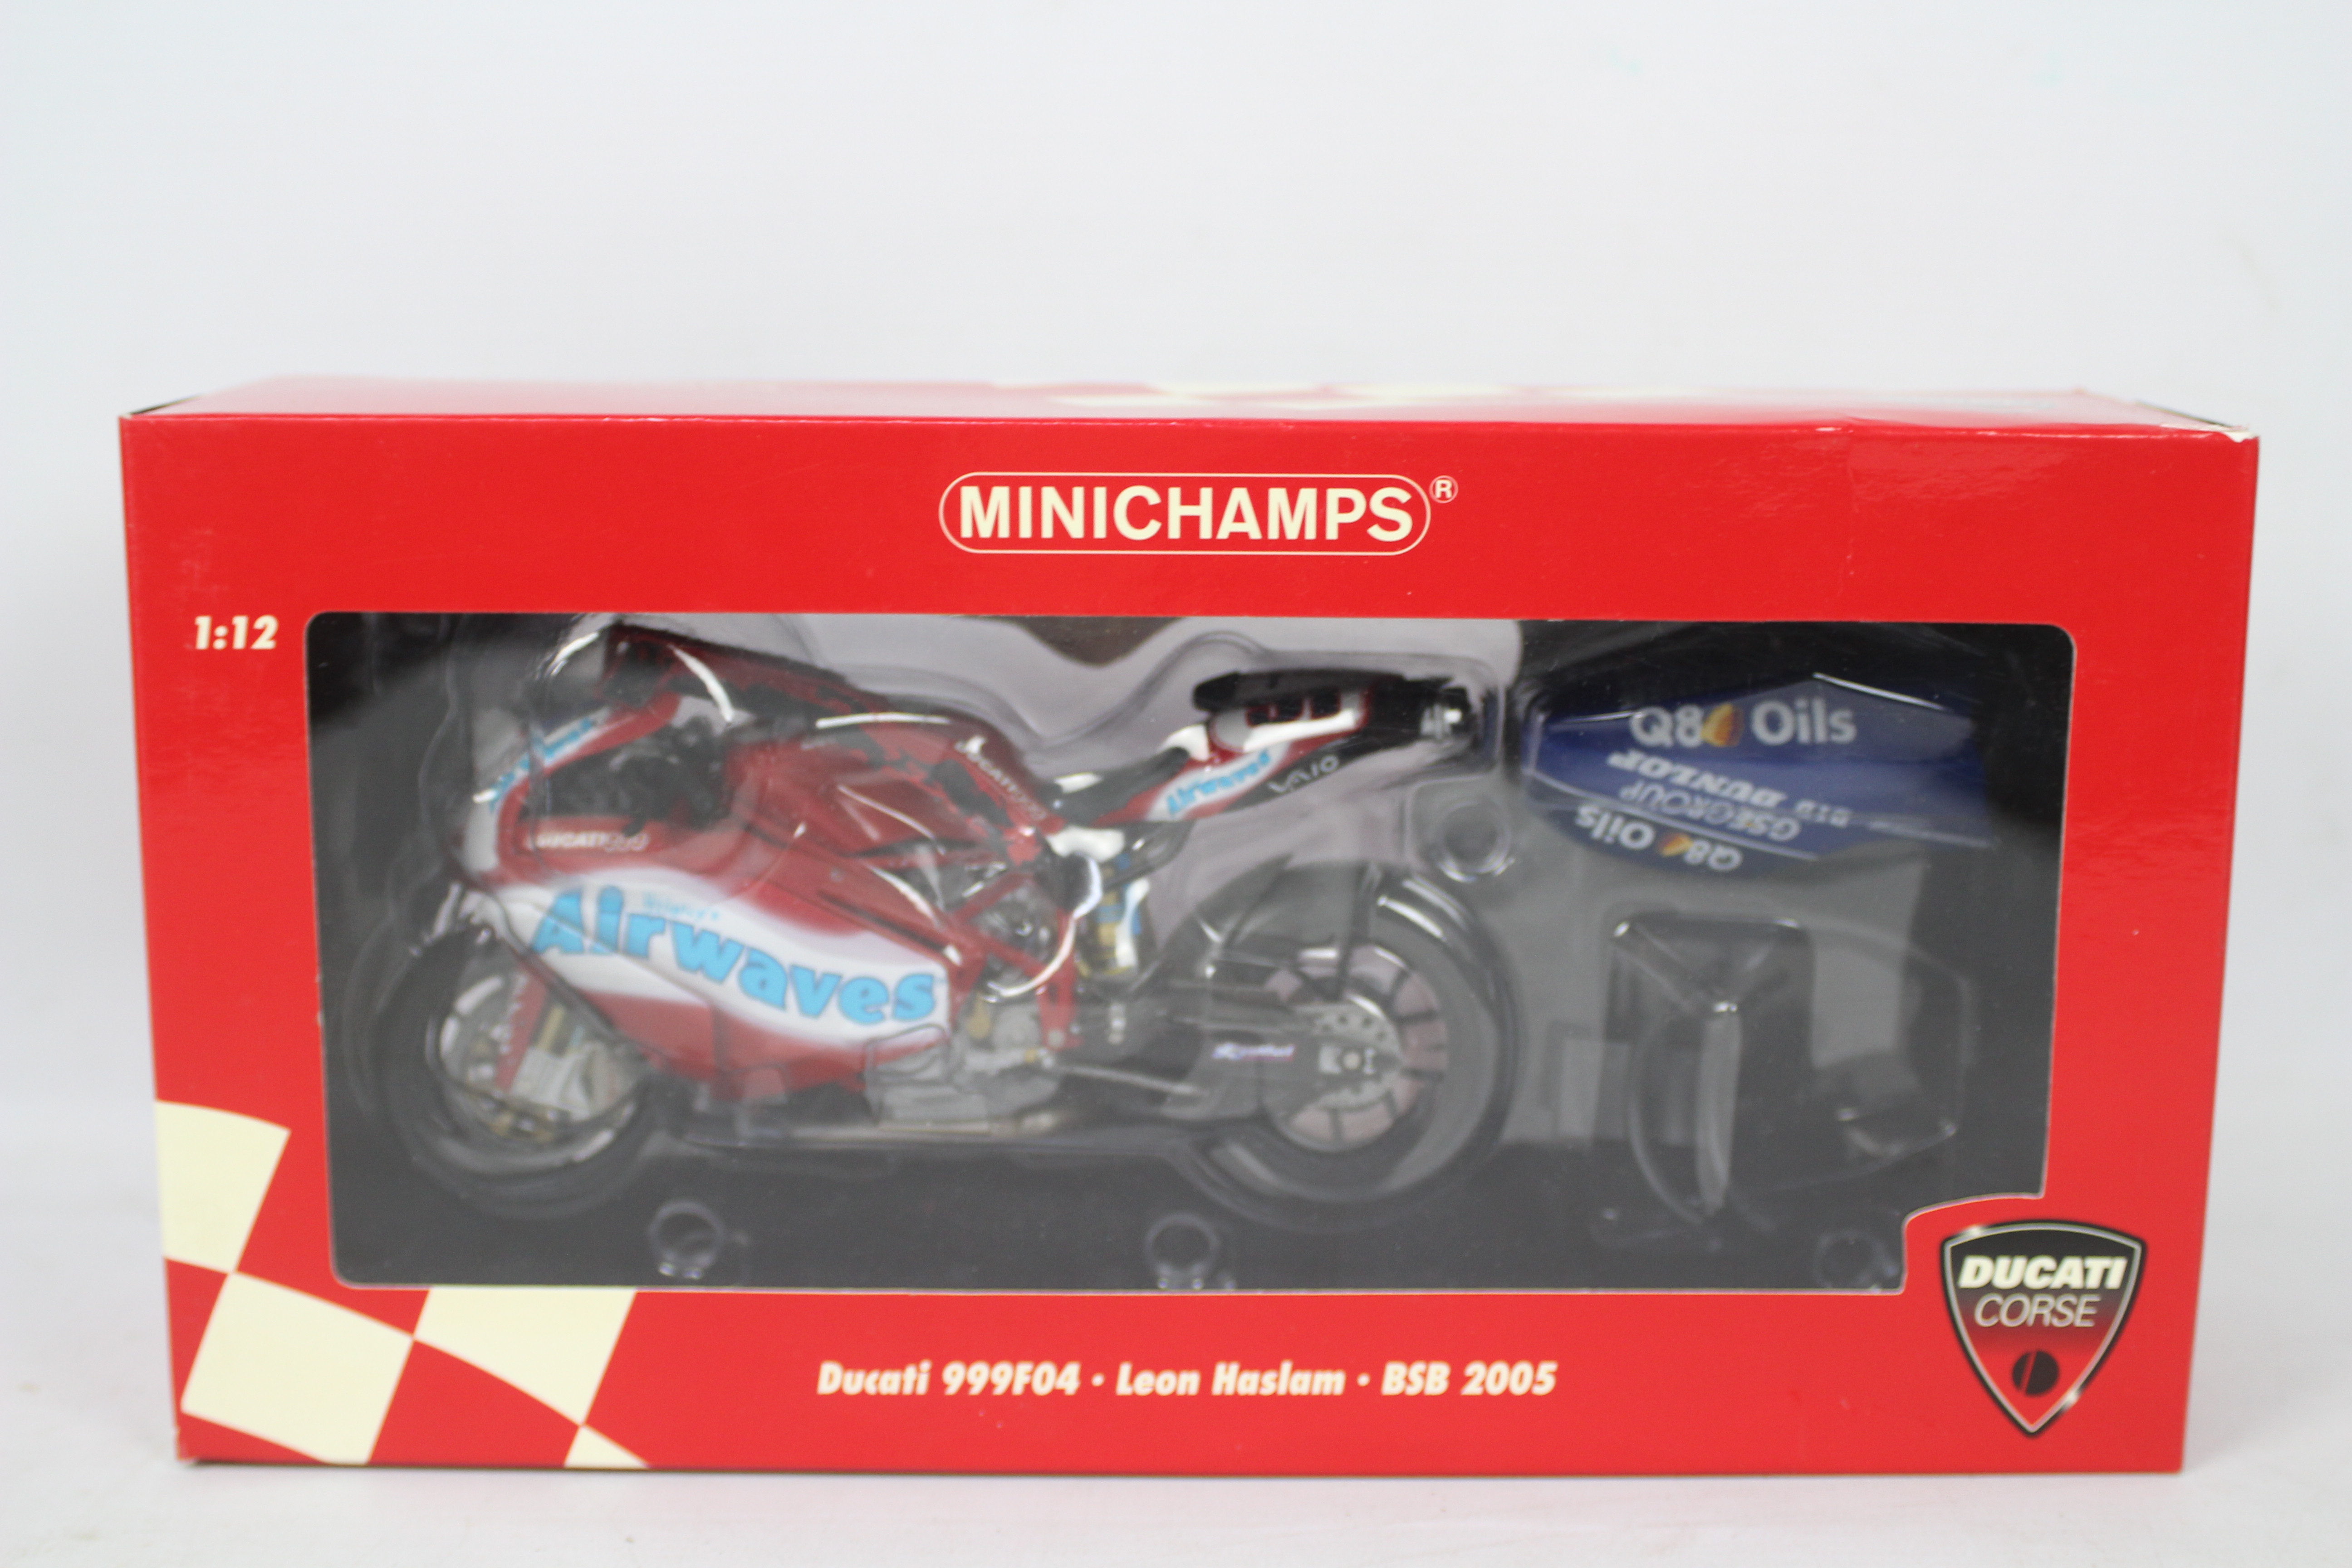 Minichamps - A boxed Minichamps #1220522291 Ducati 999F04 'Leon Haslam' Team Airwaves BSB 2005 - Bild 2 aus 3